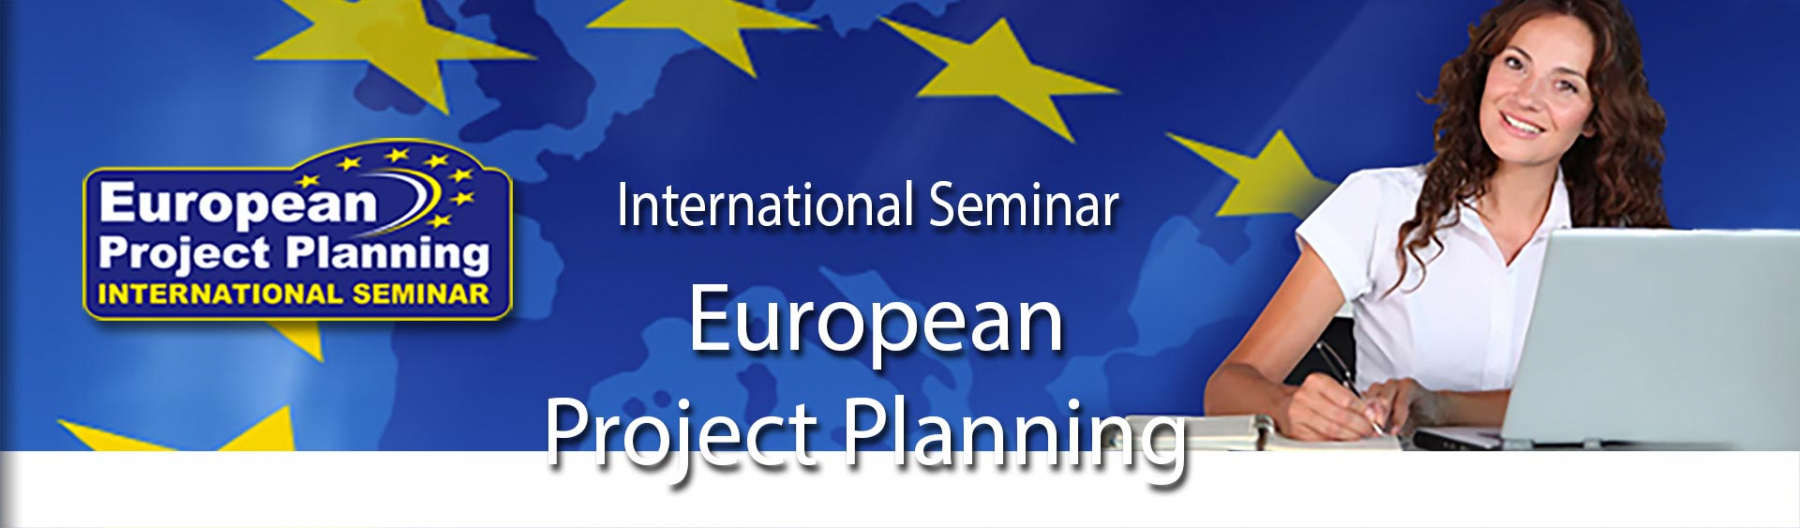 International Seminar European Project Planning